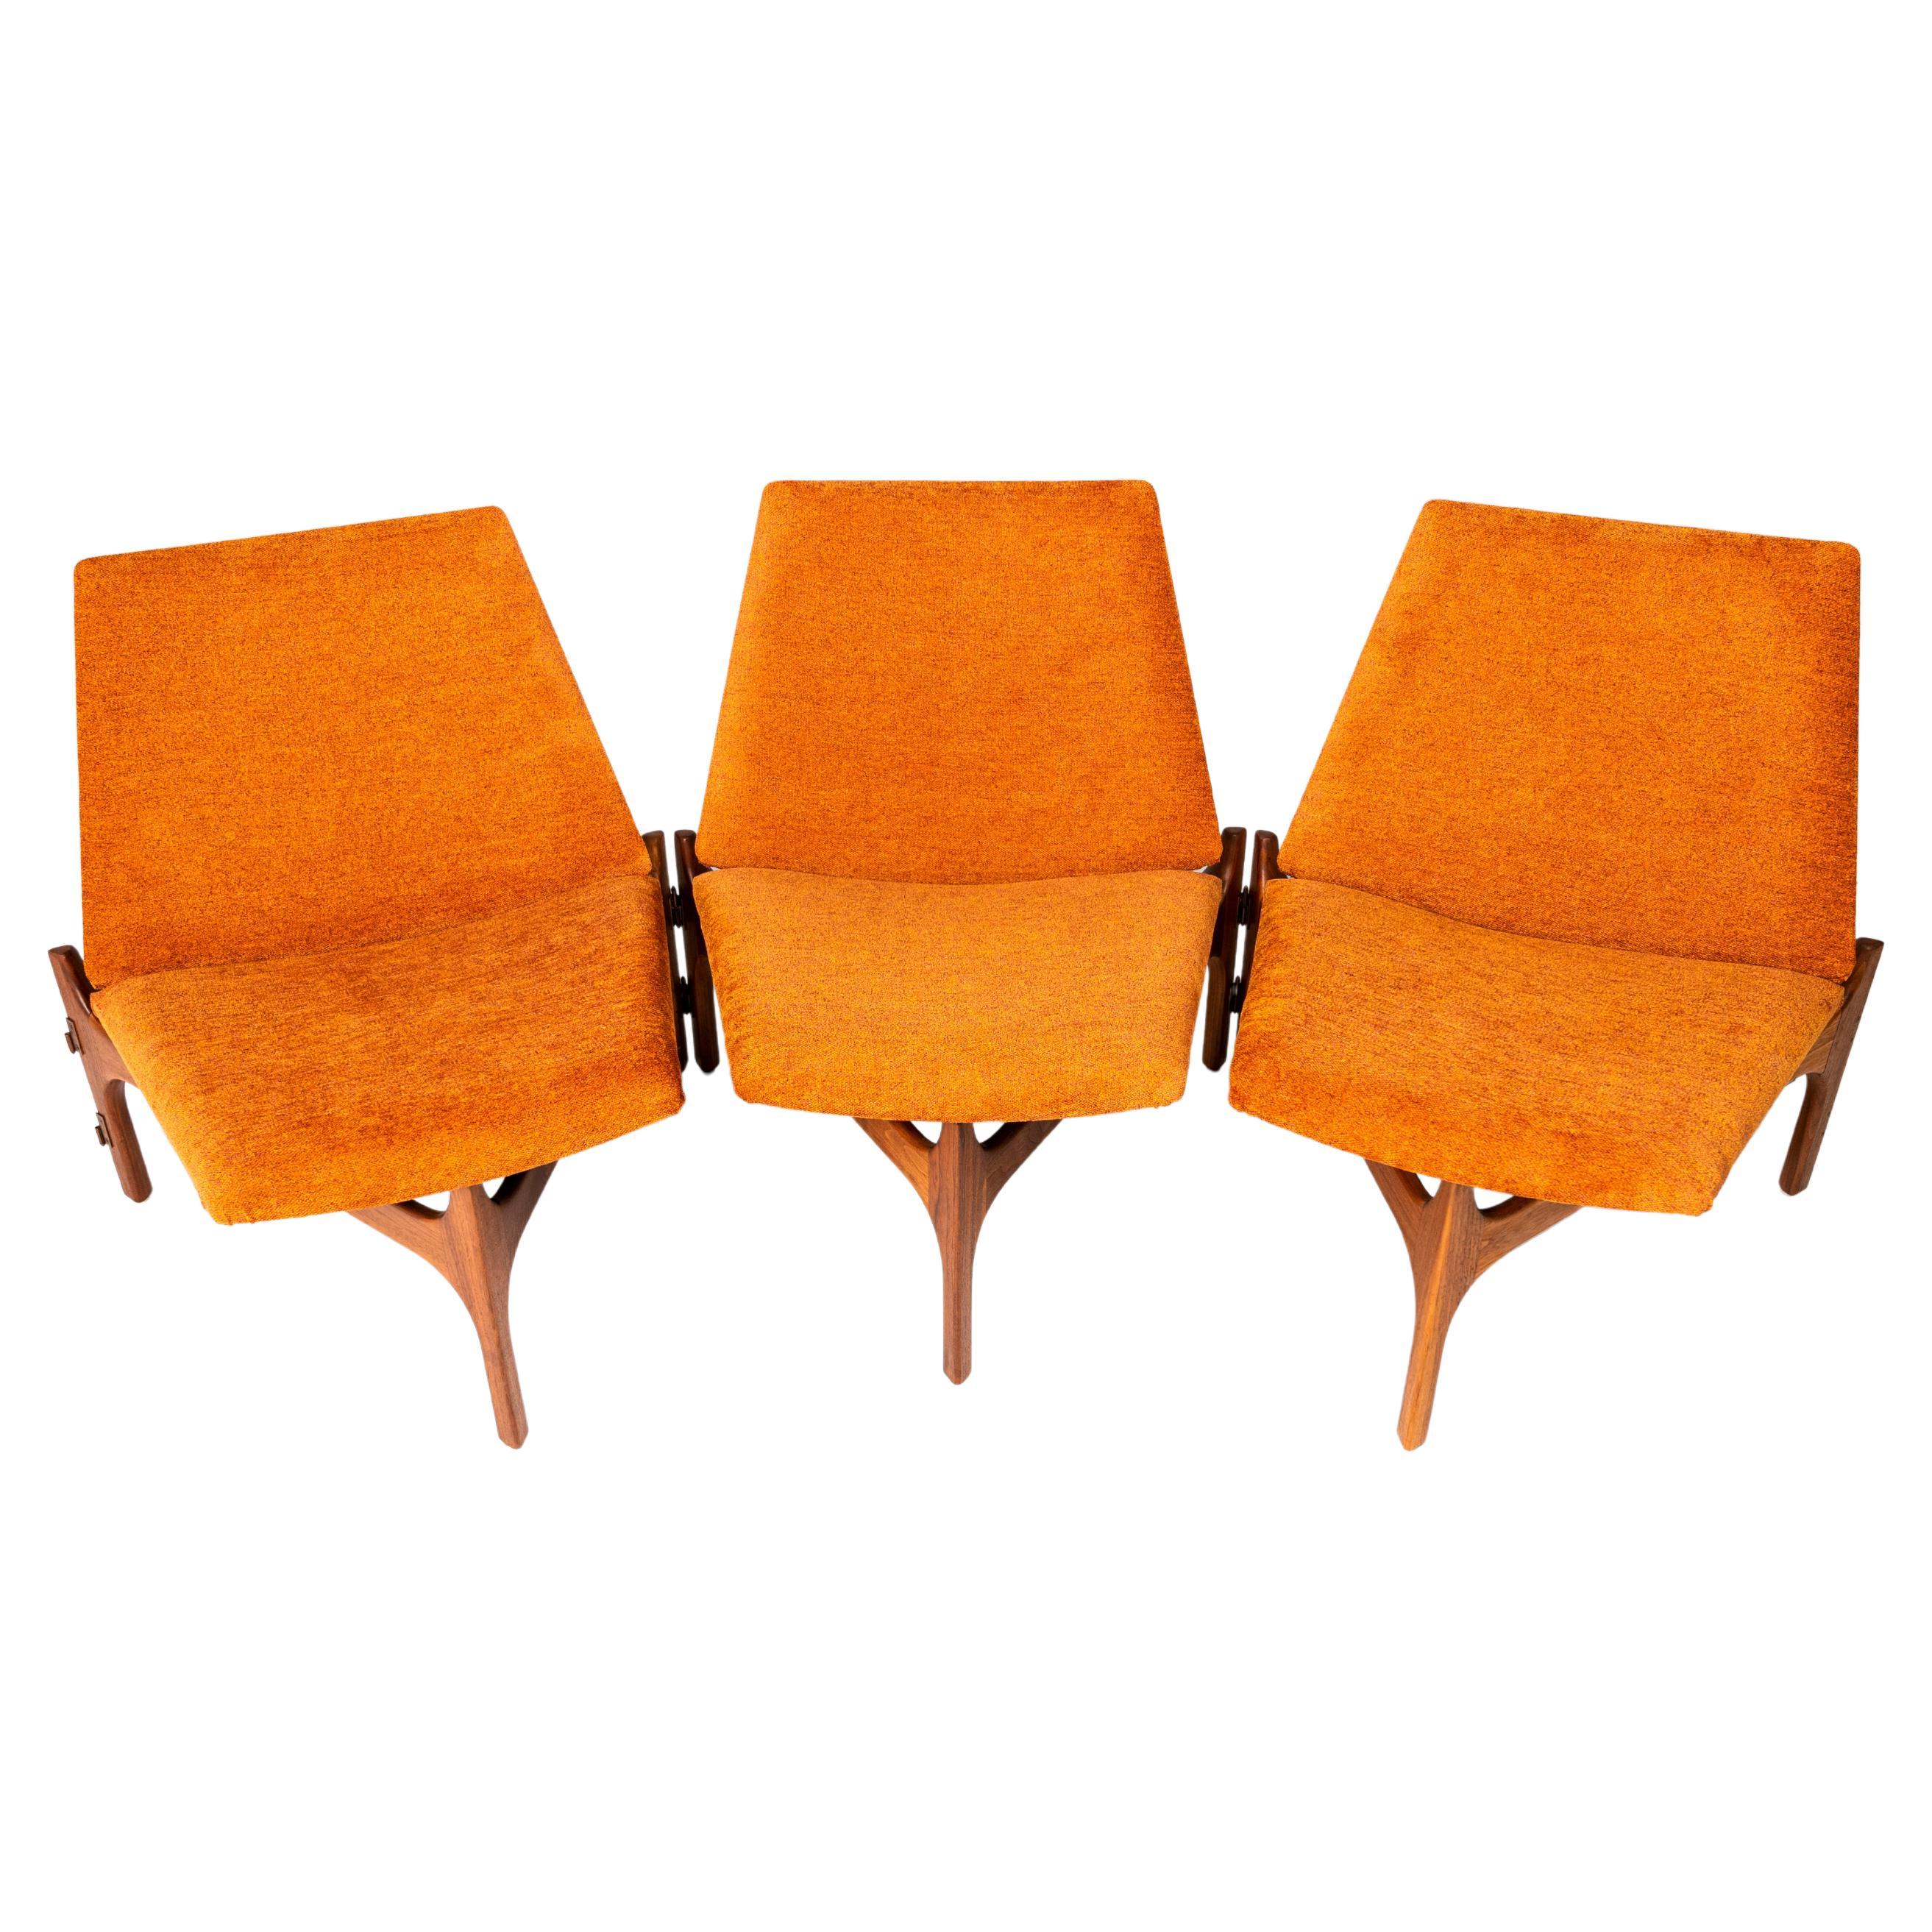 Triangular Low Profile Chairs / Bench in Walnut by Brown Saltman, USA, C. 1950s